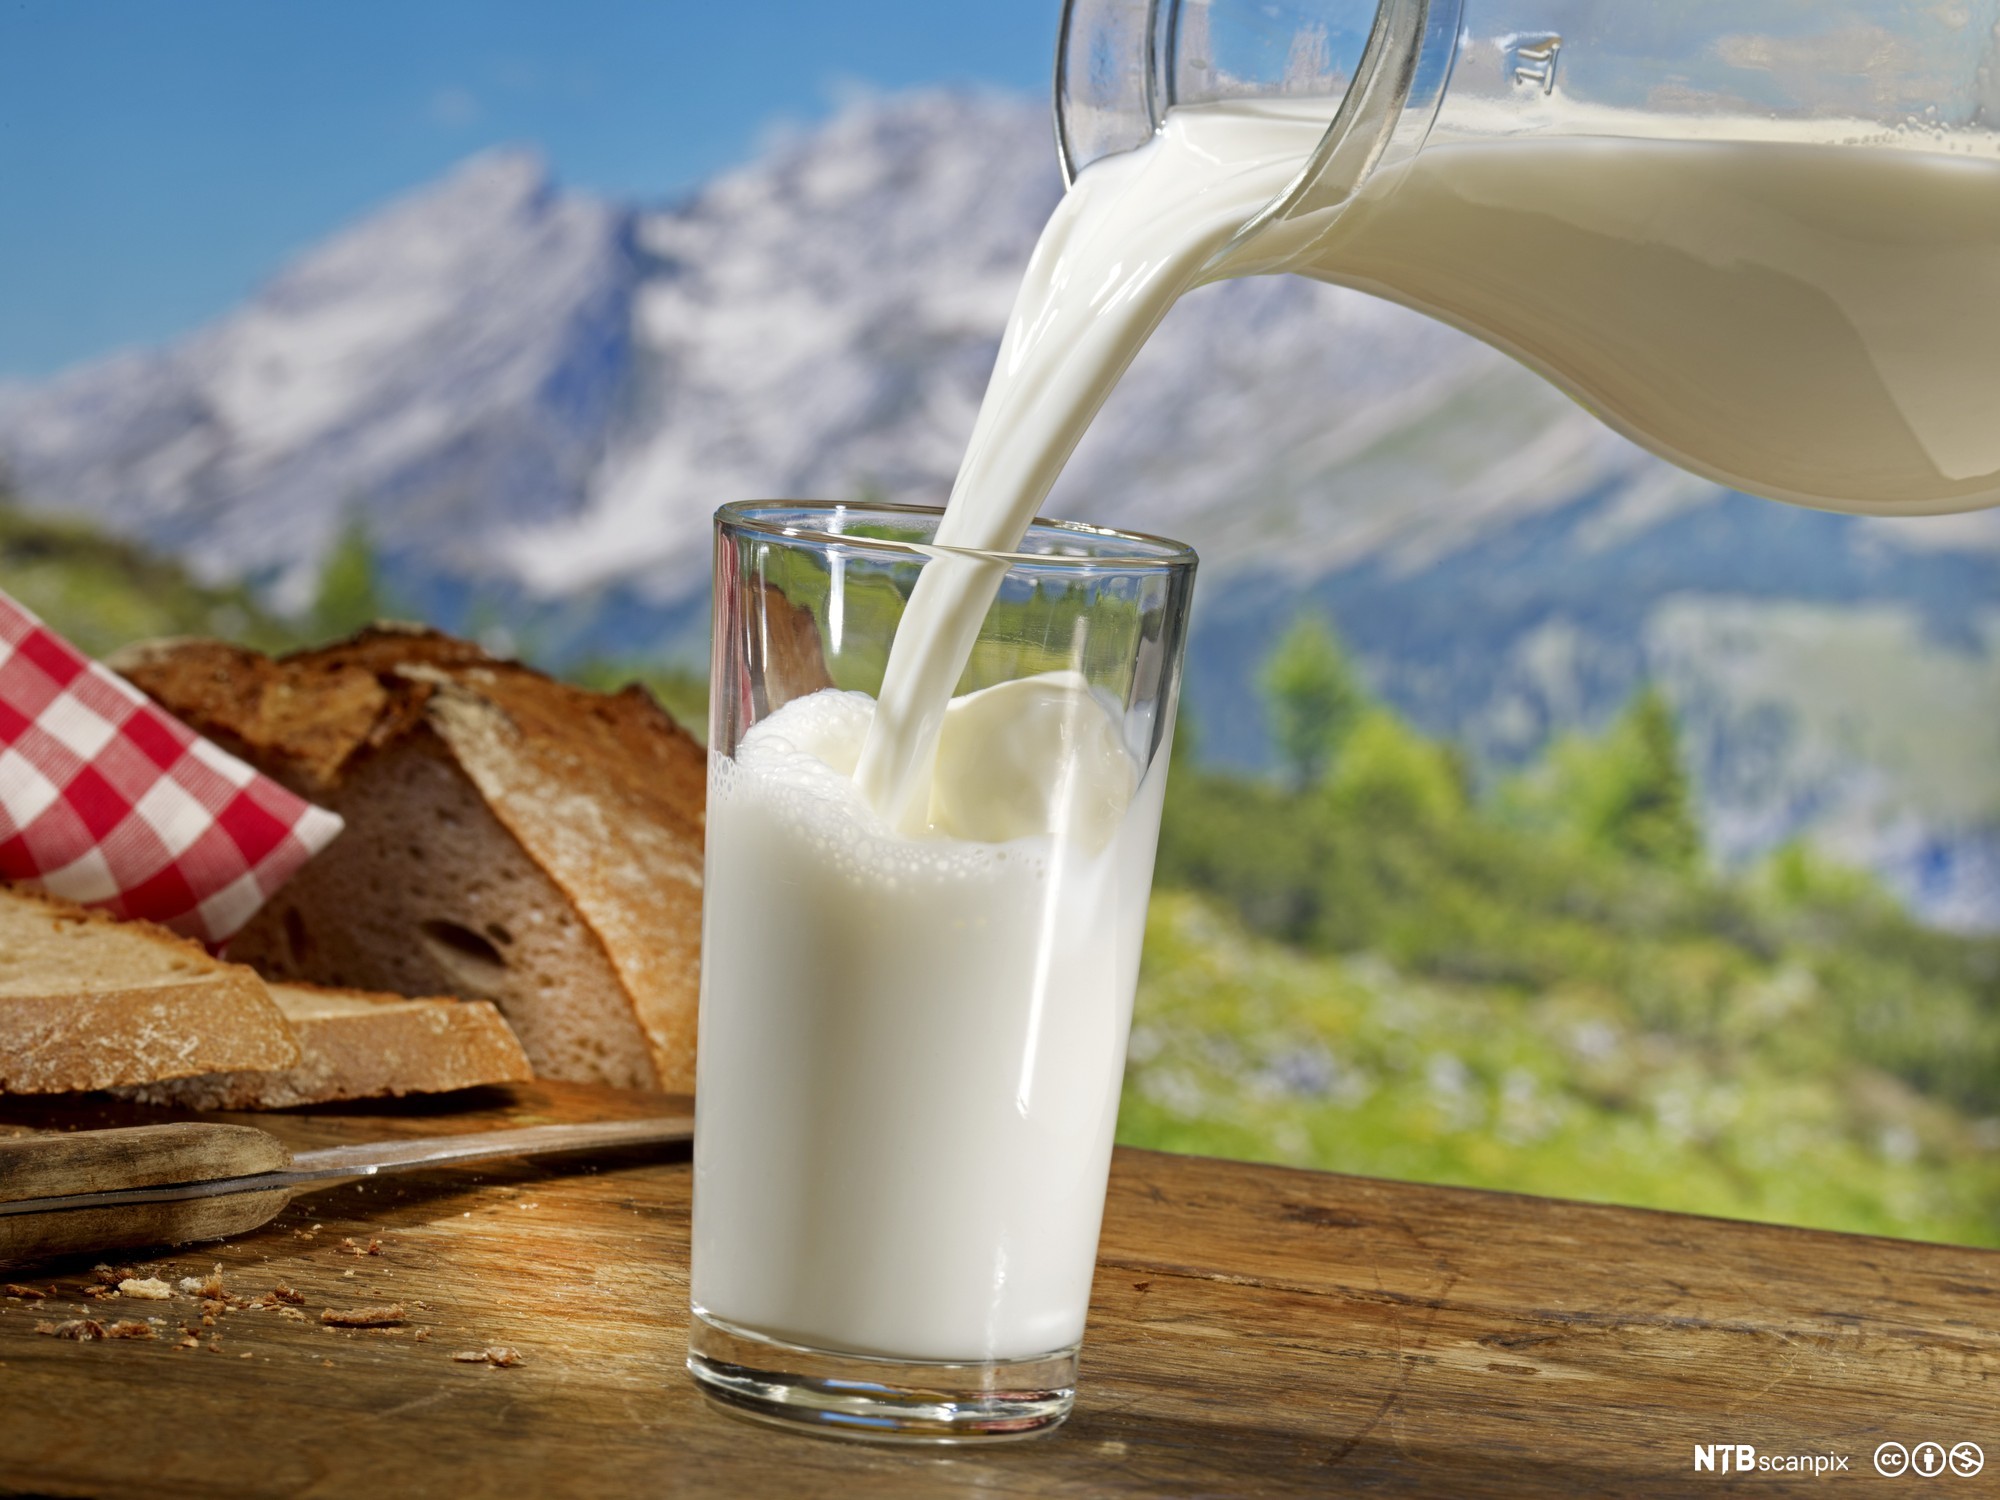 Покажи картинку молока. Молоко красивые картинки. Молоко в горах. Молоко море. Молоко тренды.